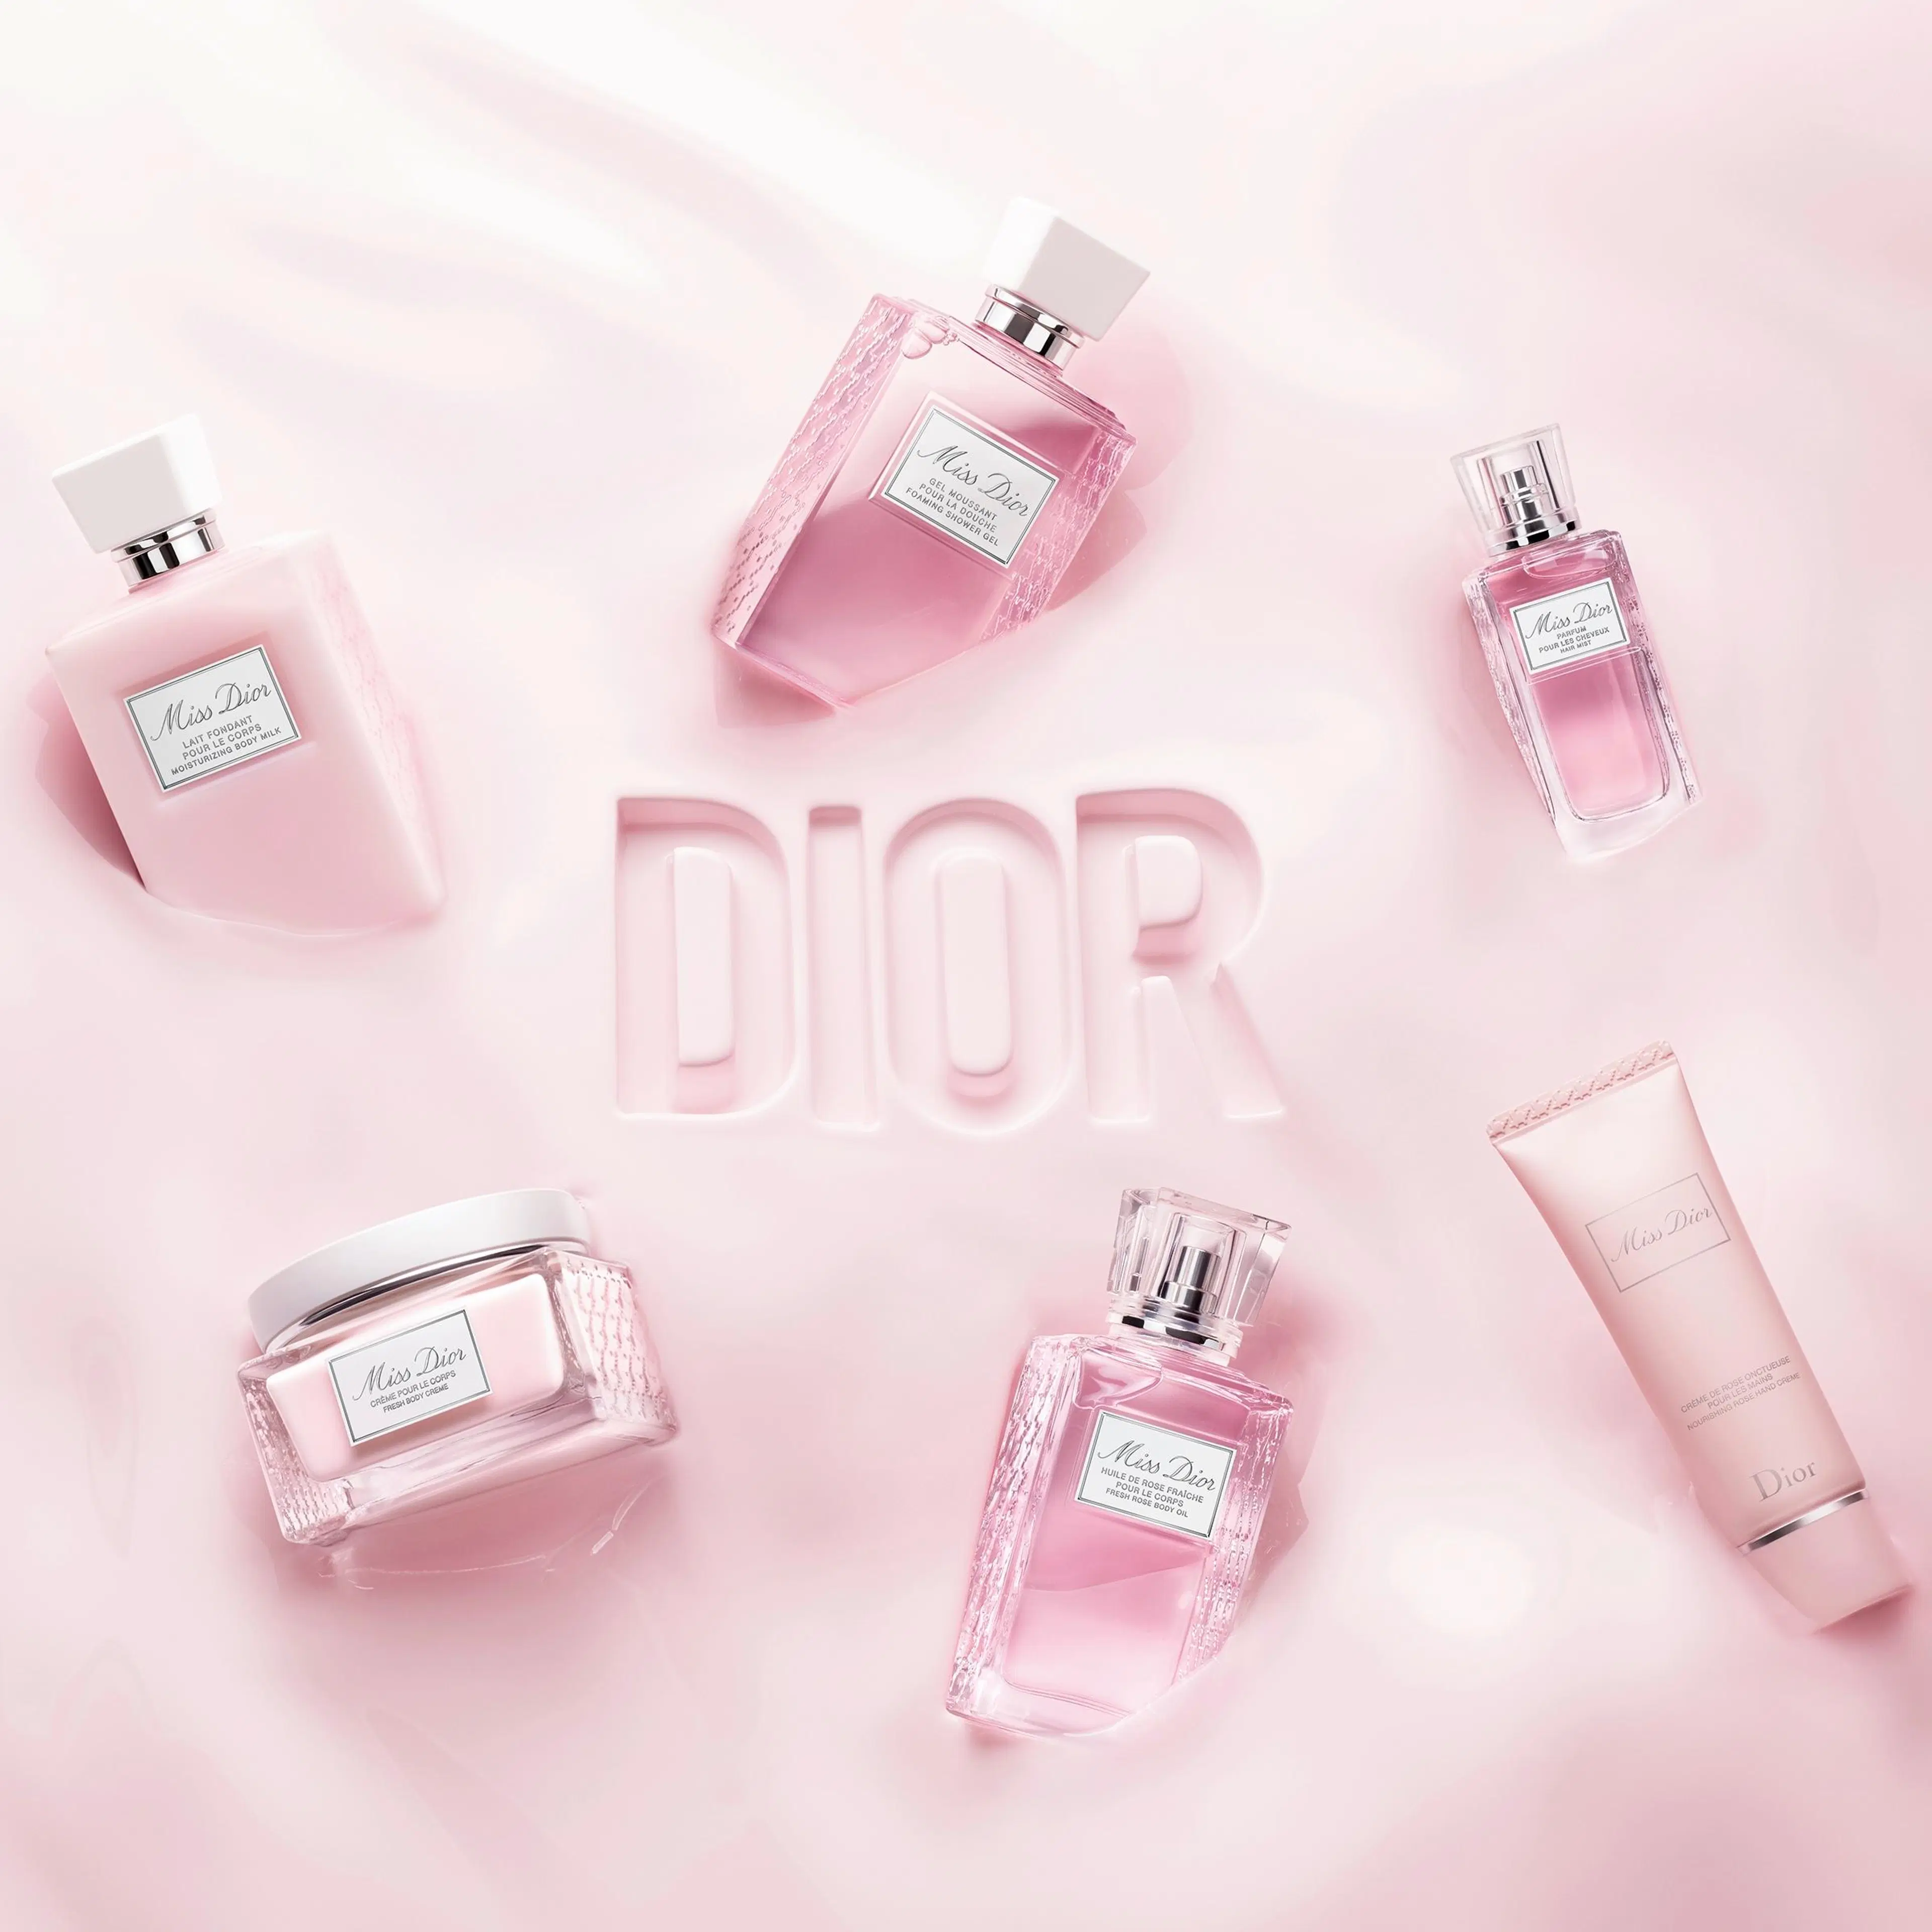 DIOR Miss Dior Body Mist vartalotuoksu 100 ml